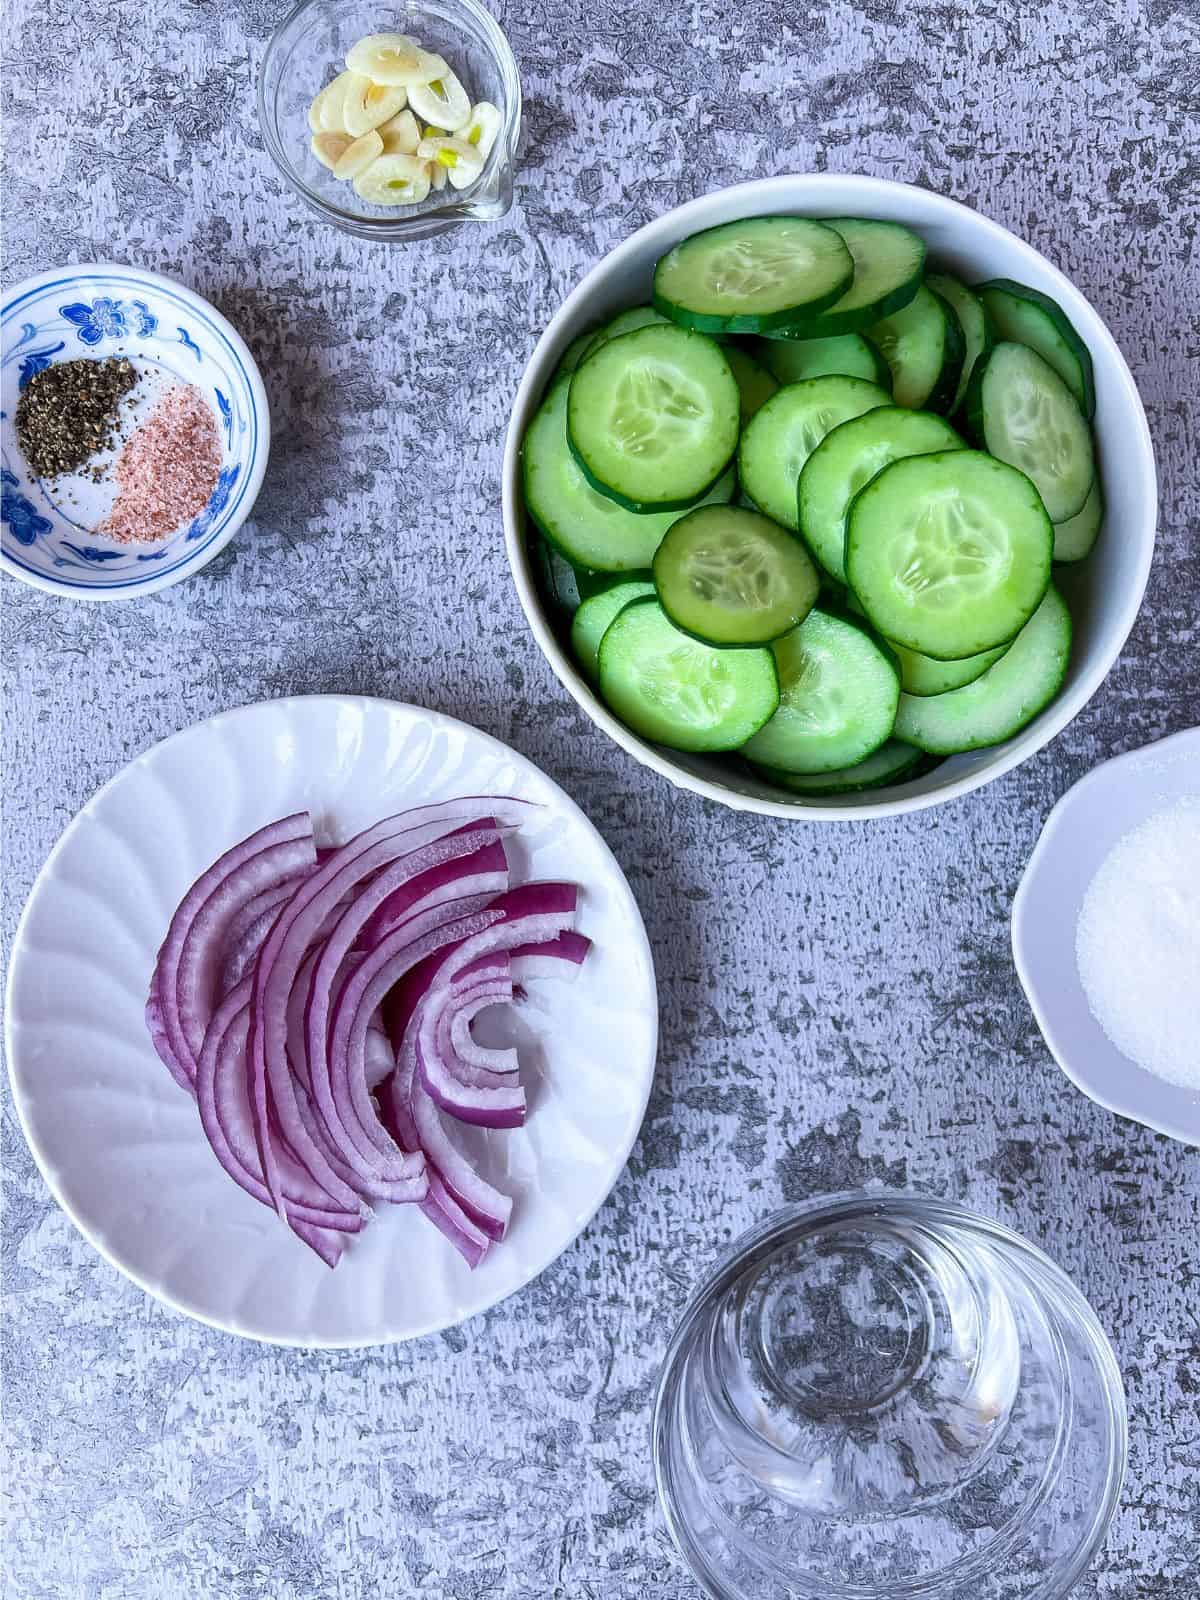 Ingredients for cucumber salad.